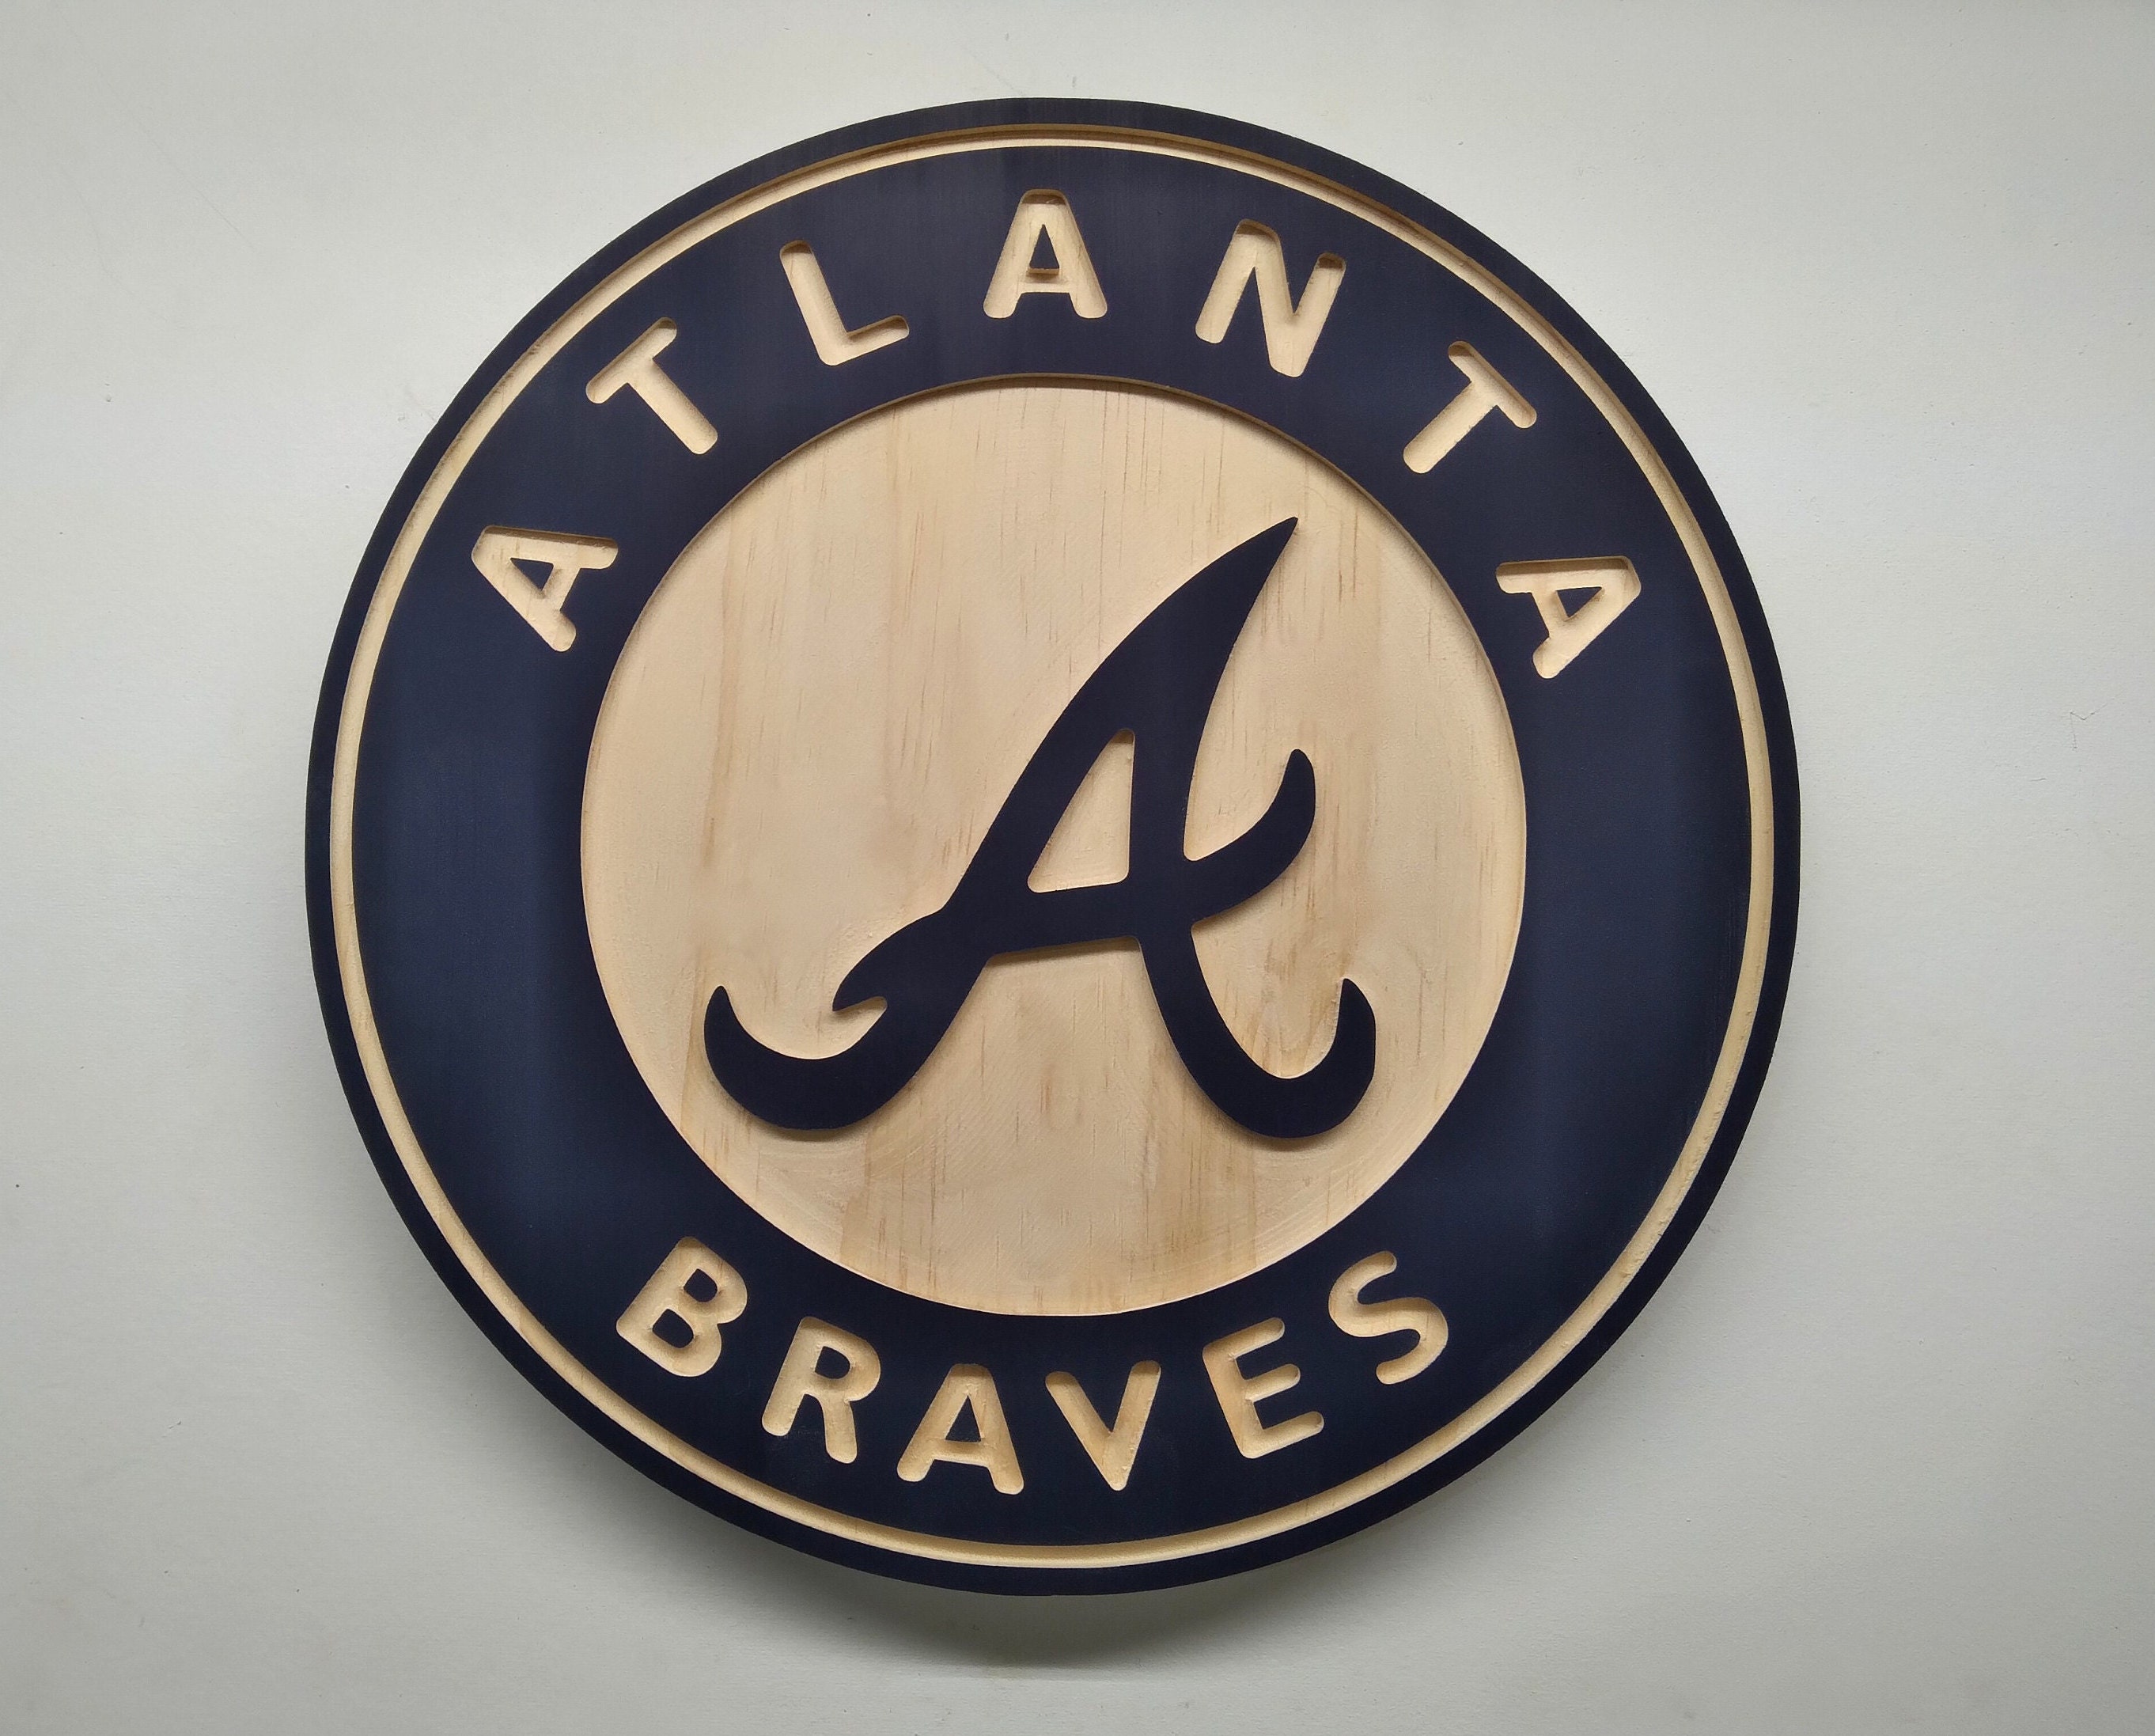 Black Atlanta Braves Baseball Jersey Gift For Dad - Inspire Uplift